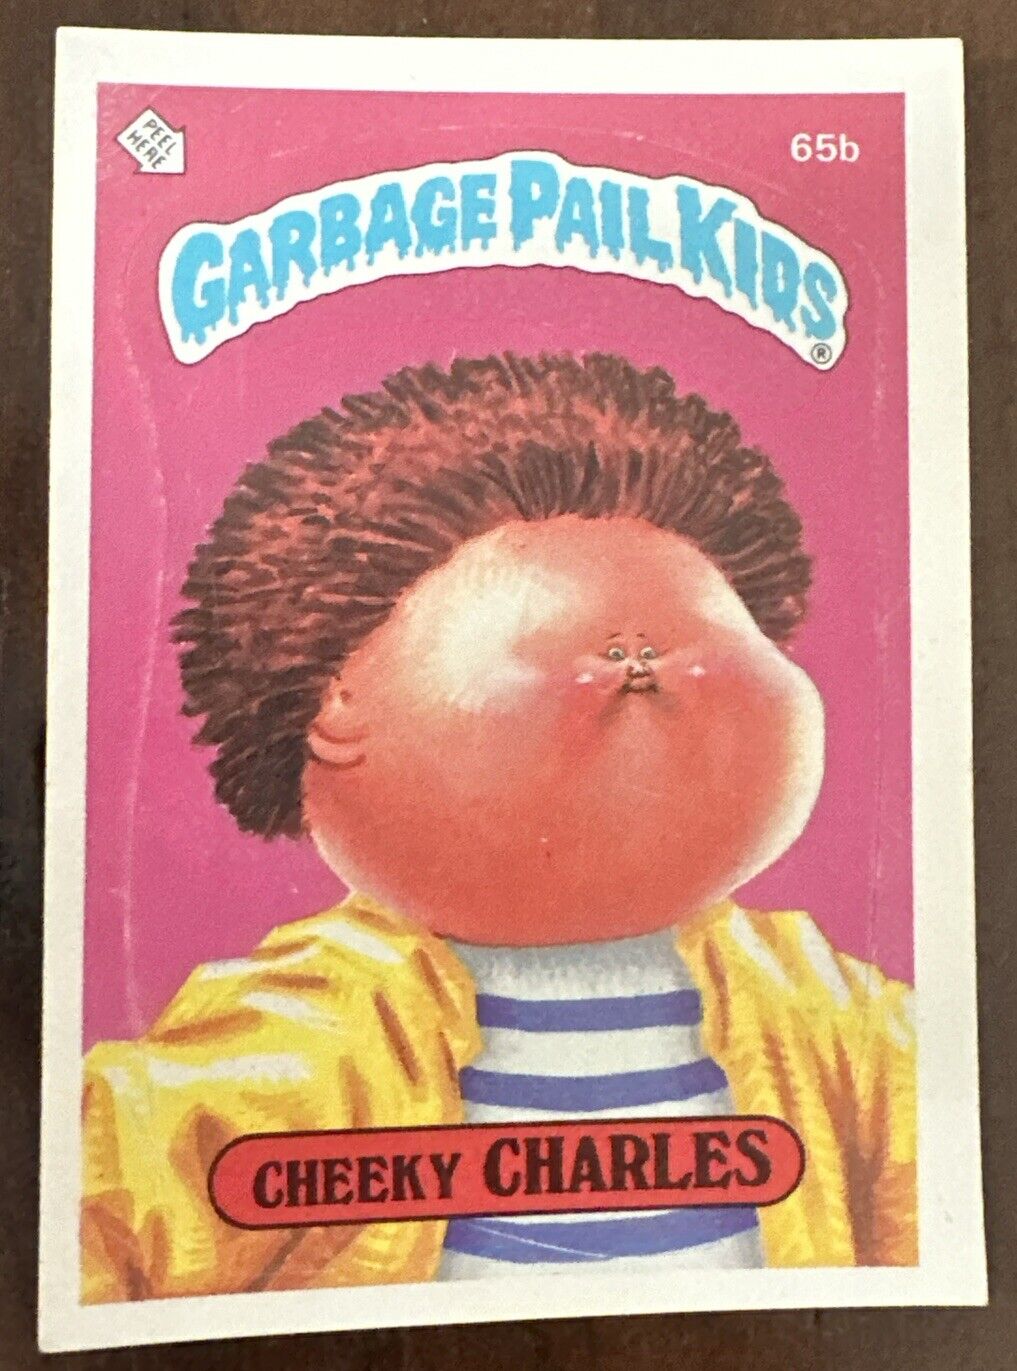 1985 Topps Garbage Pail Kids Original 2nd Series Card #65b CHEEKY CHARLES